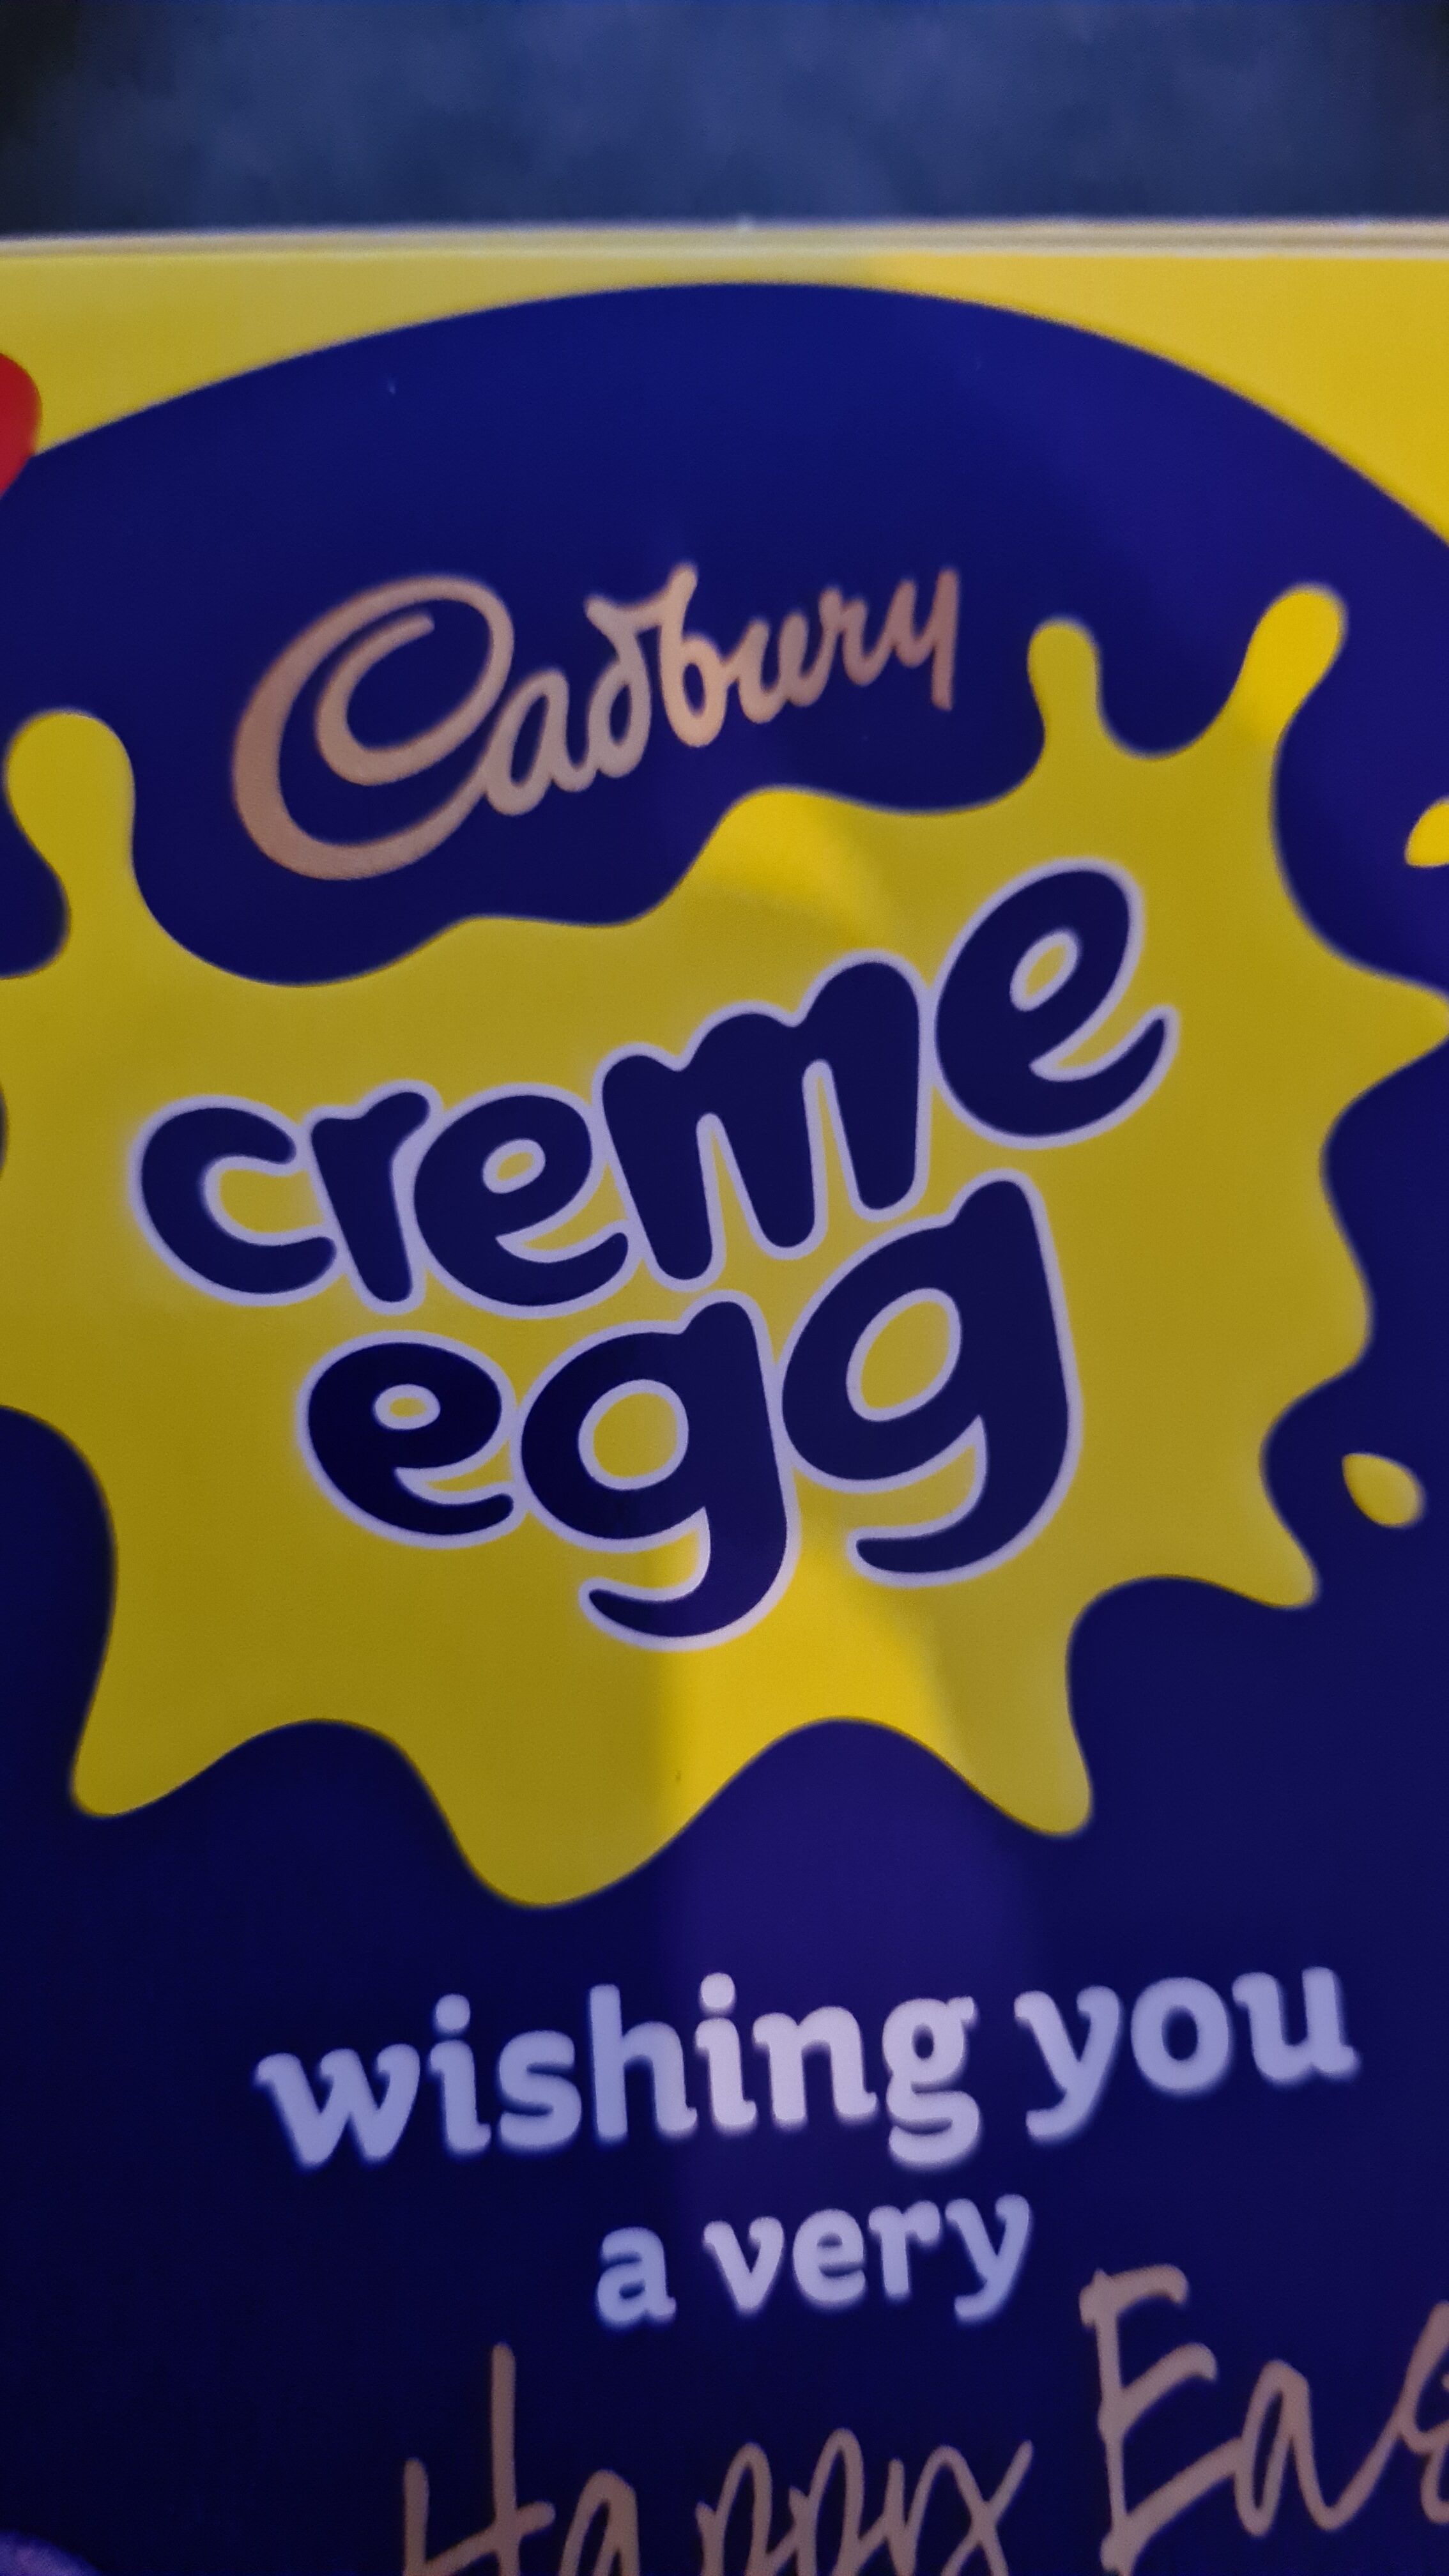 cadbury creme egg - Product